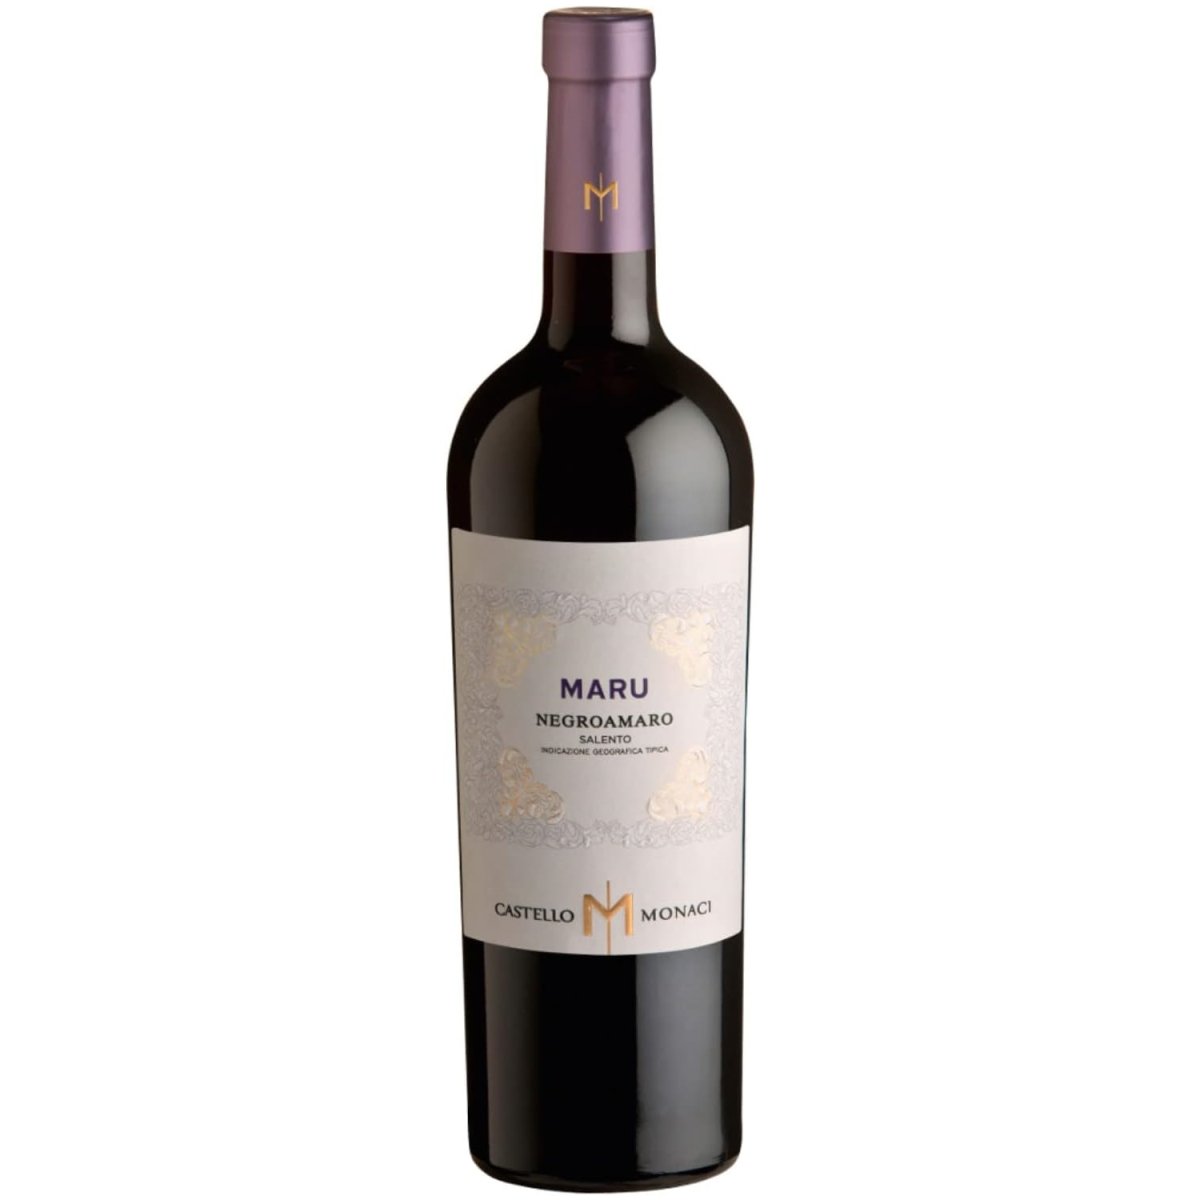 Castello Monaci Maru Negroamaro IGT Rotwein Wein trocken Italien (3 x 0,75l) - Versanel -